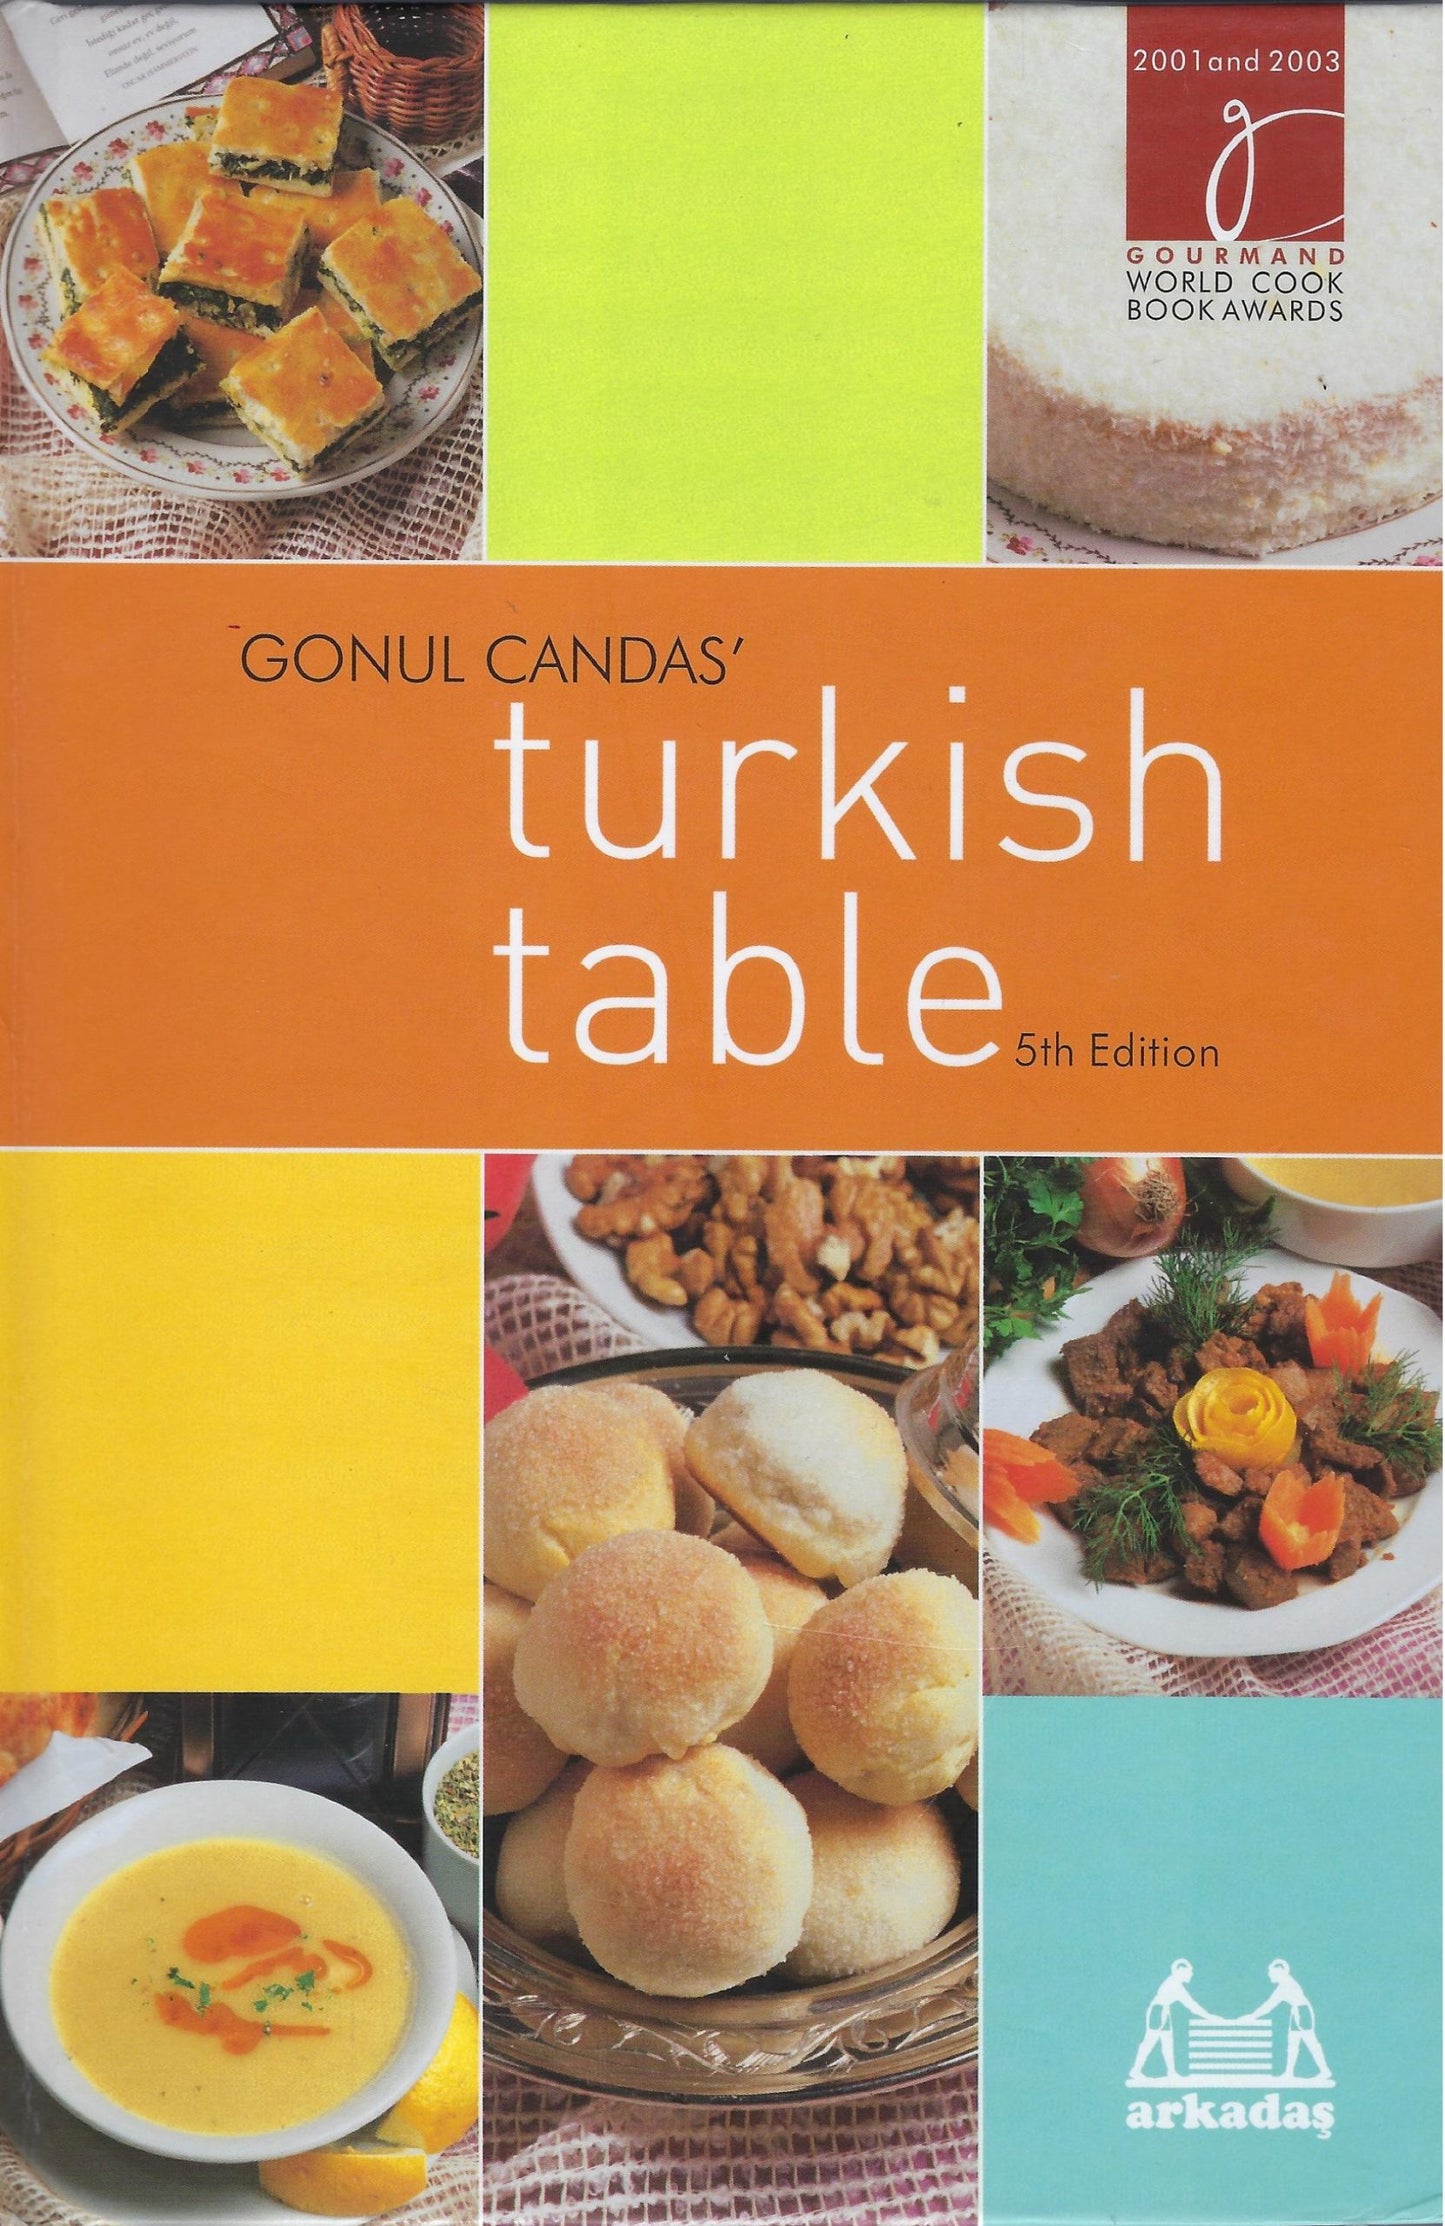 Turkish table 5th edition